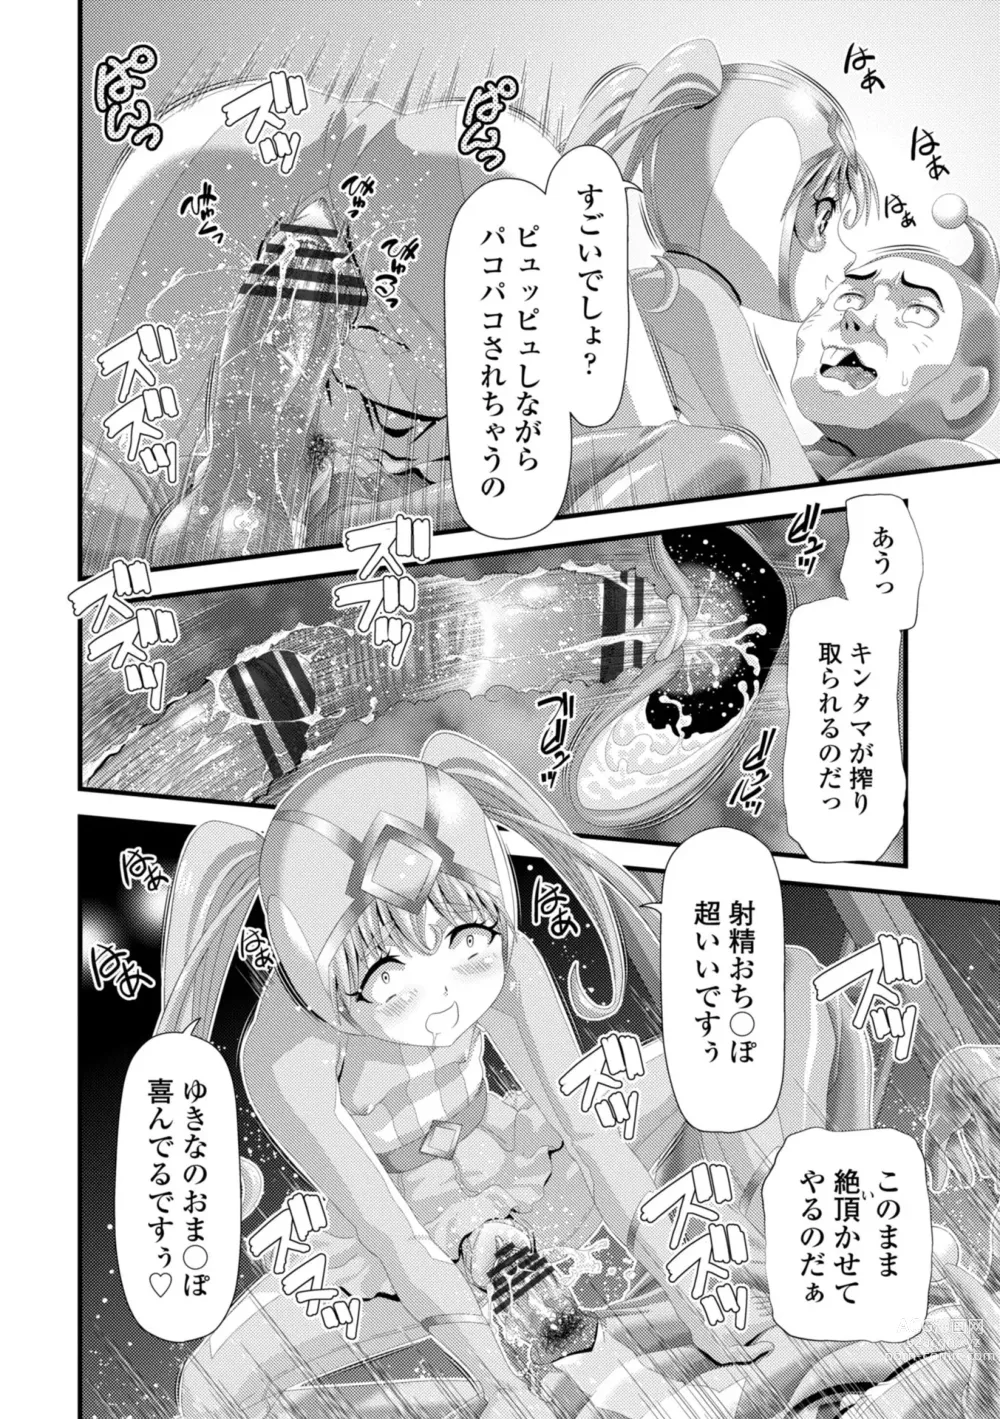 Page 14 of manga minimum material 1